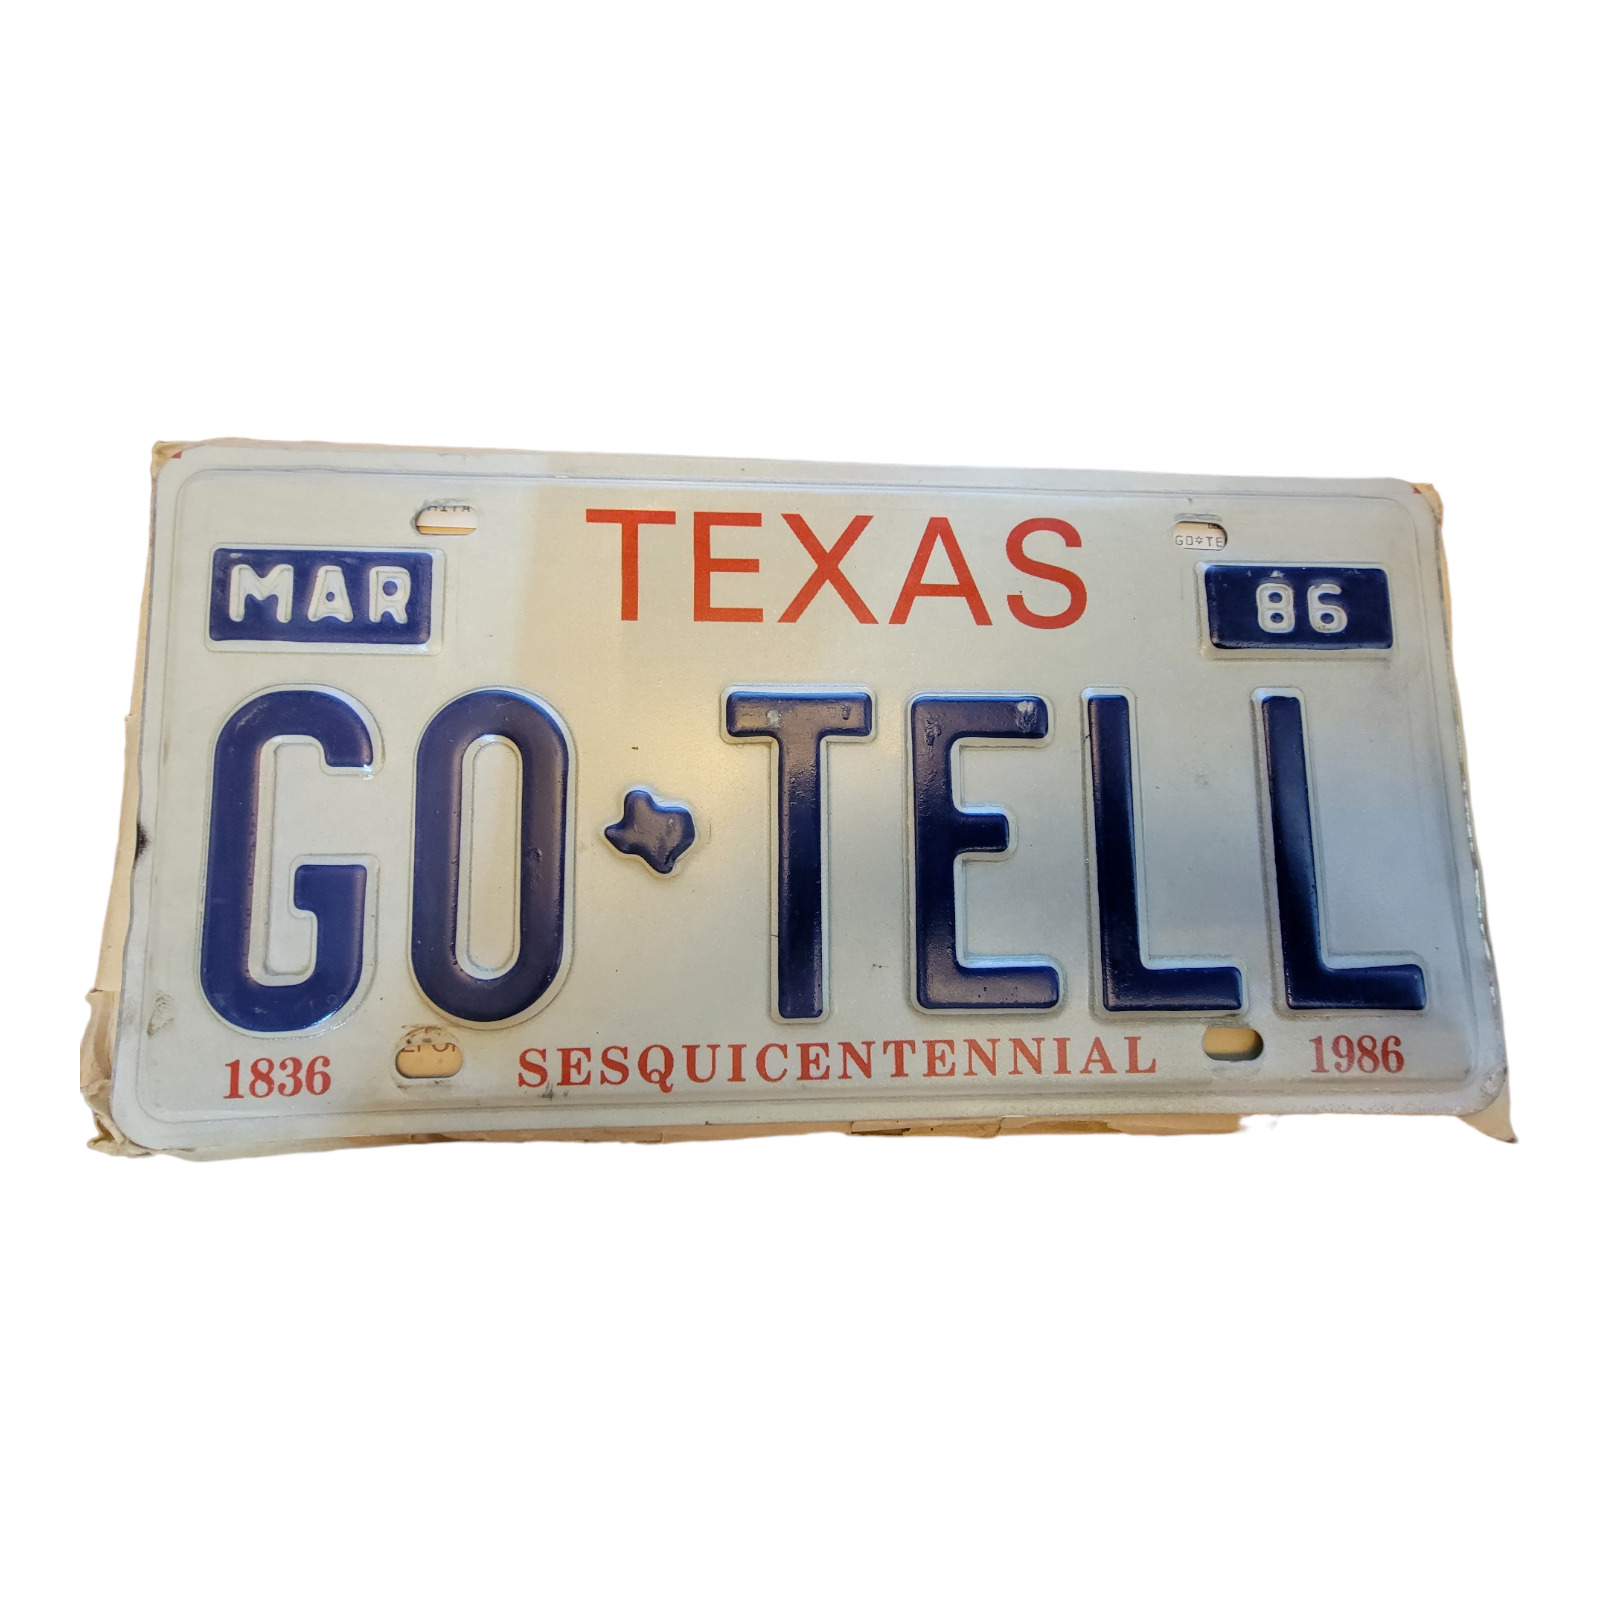 Vintage 1986 Go Tell Texas License Plate - Authentic Collectible Memorabilia